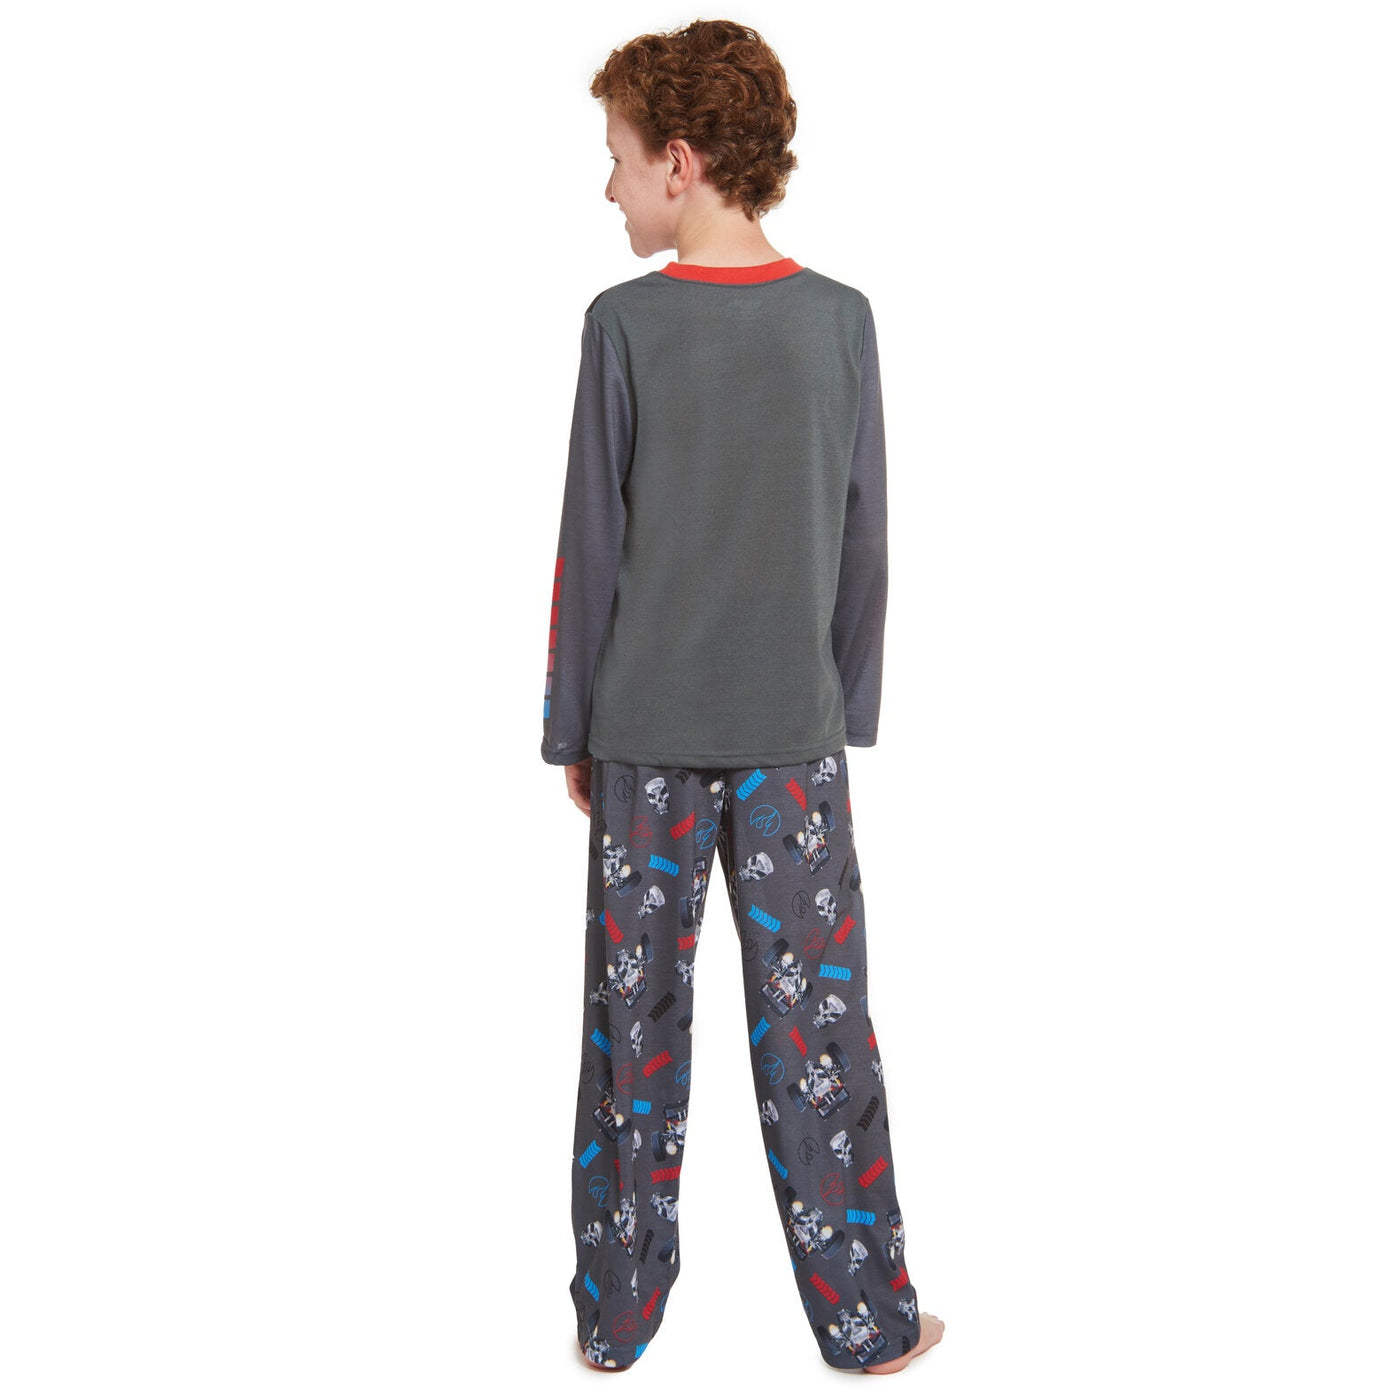 Hot Wheels Pajama Shirt and Pants Sleep Set - imagikids